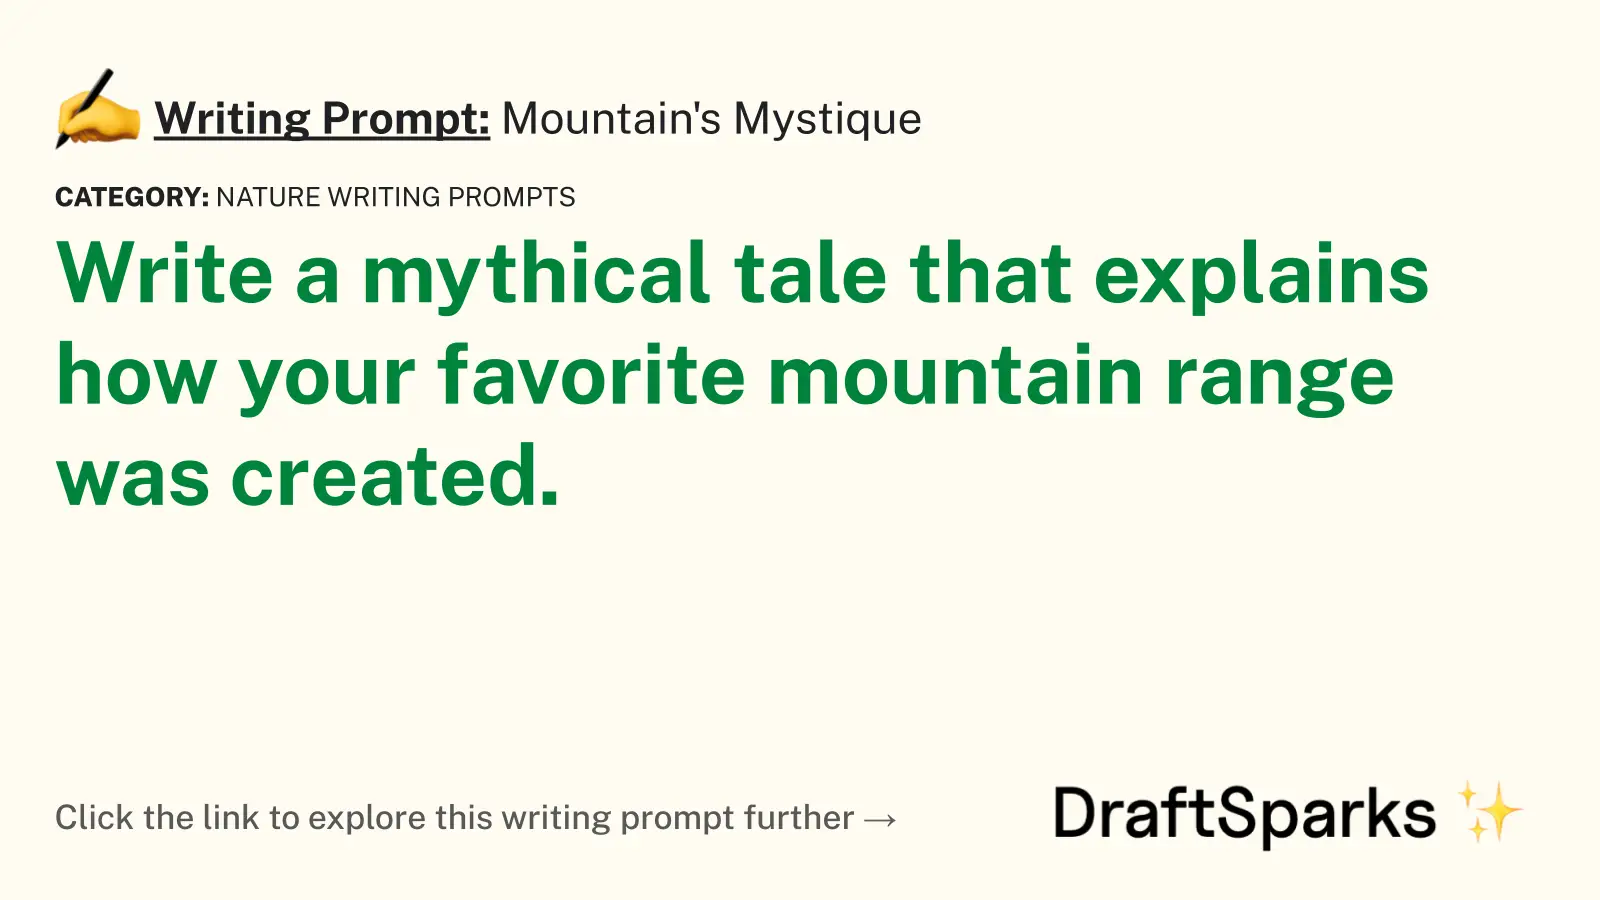 Mountain’s Mystique